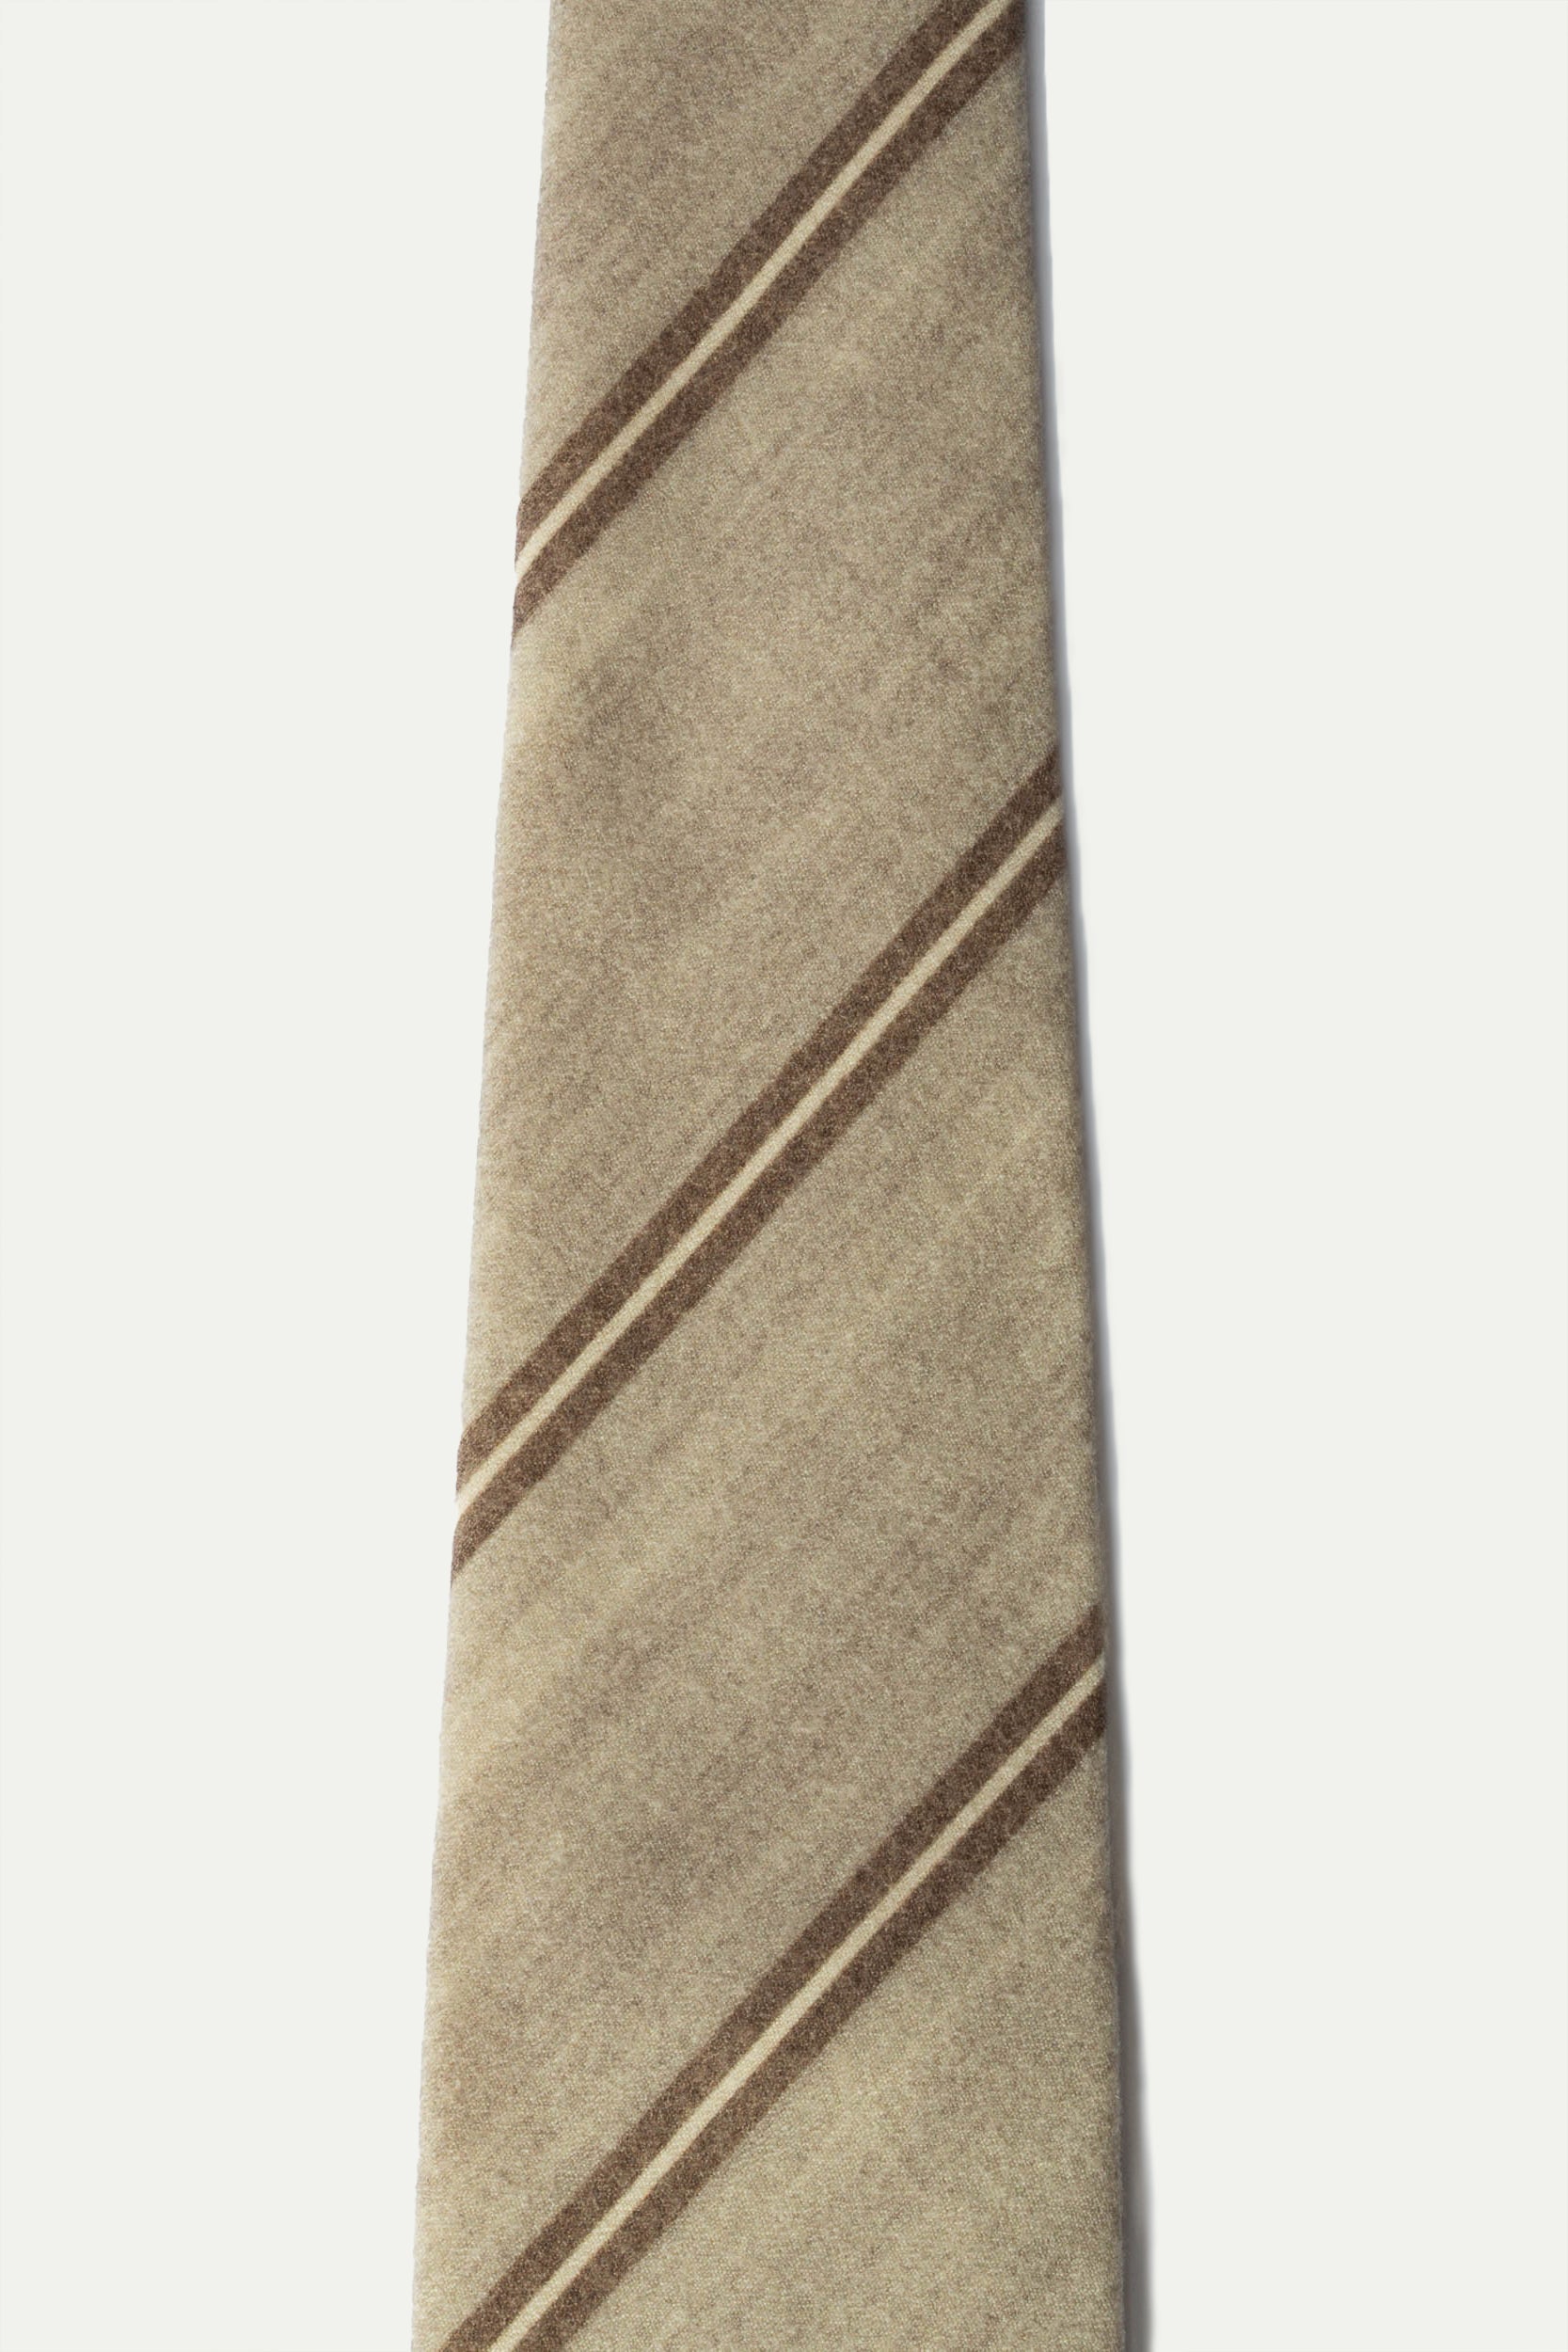 Cravate régimentaire grise et marron - Made In Italy